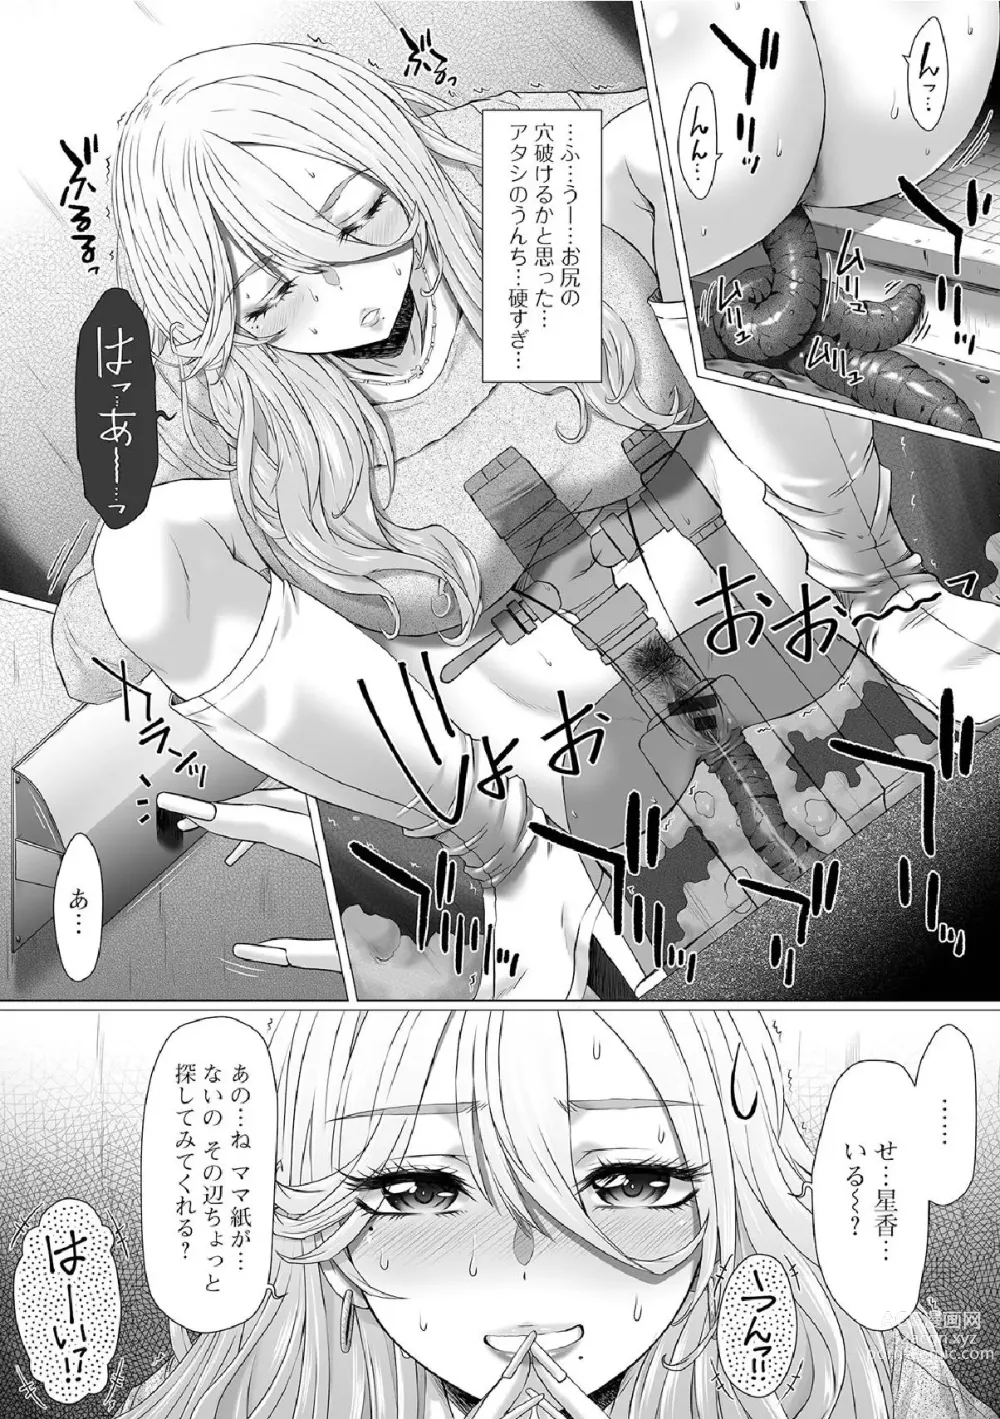 Page 180 of manga Gofujou Sister